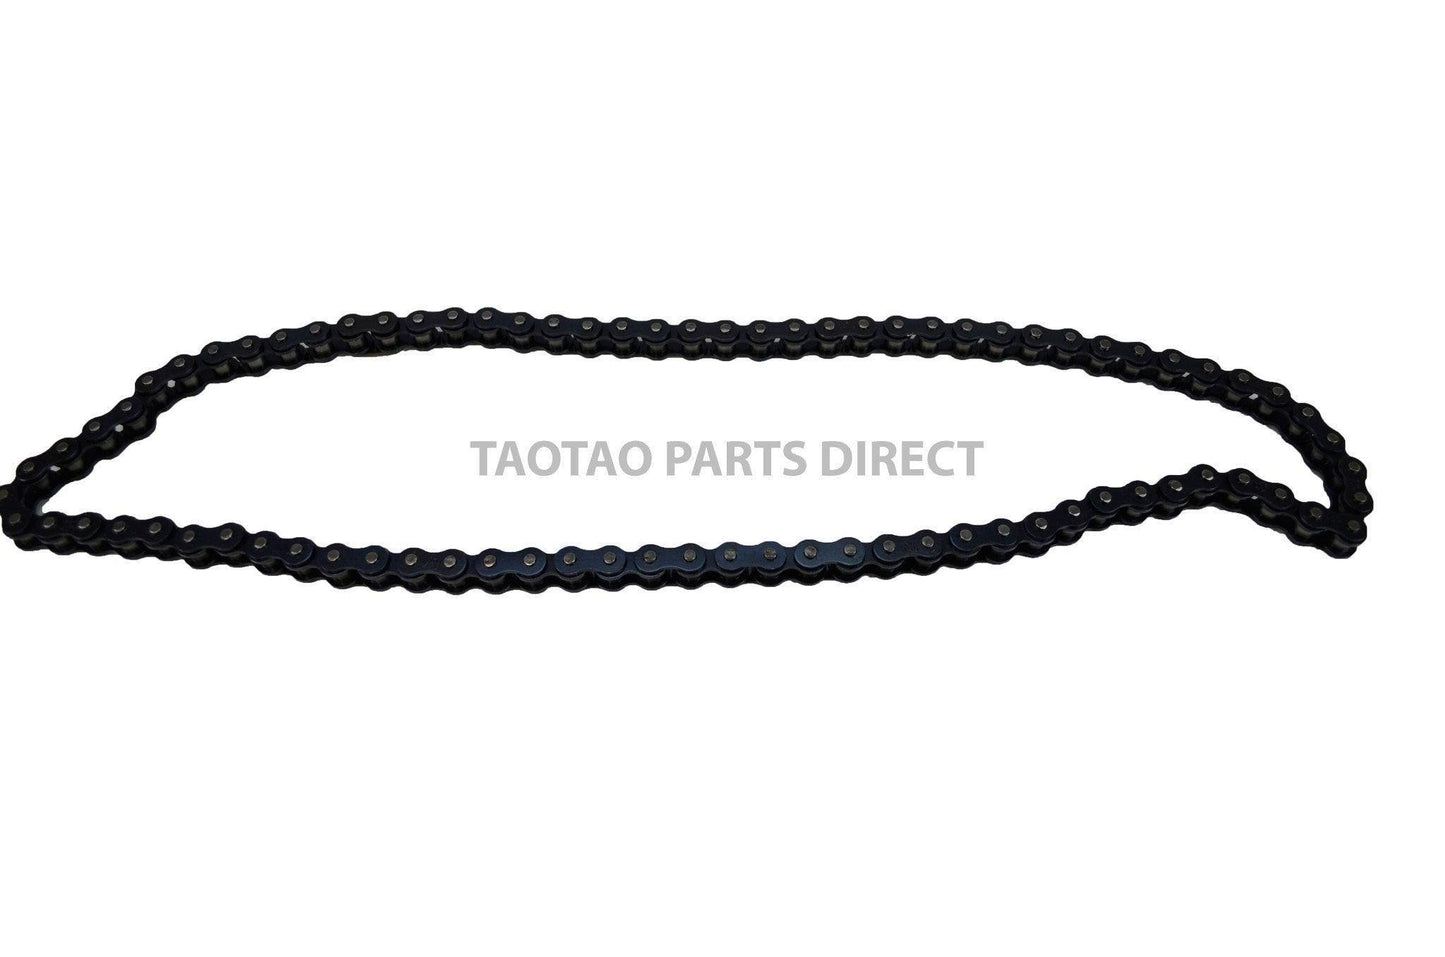 ATA125D Chain - TaoTao Parts Direct